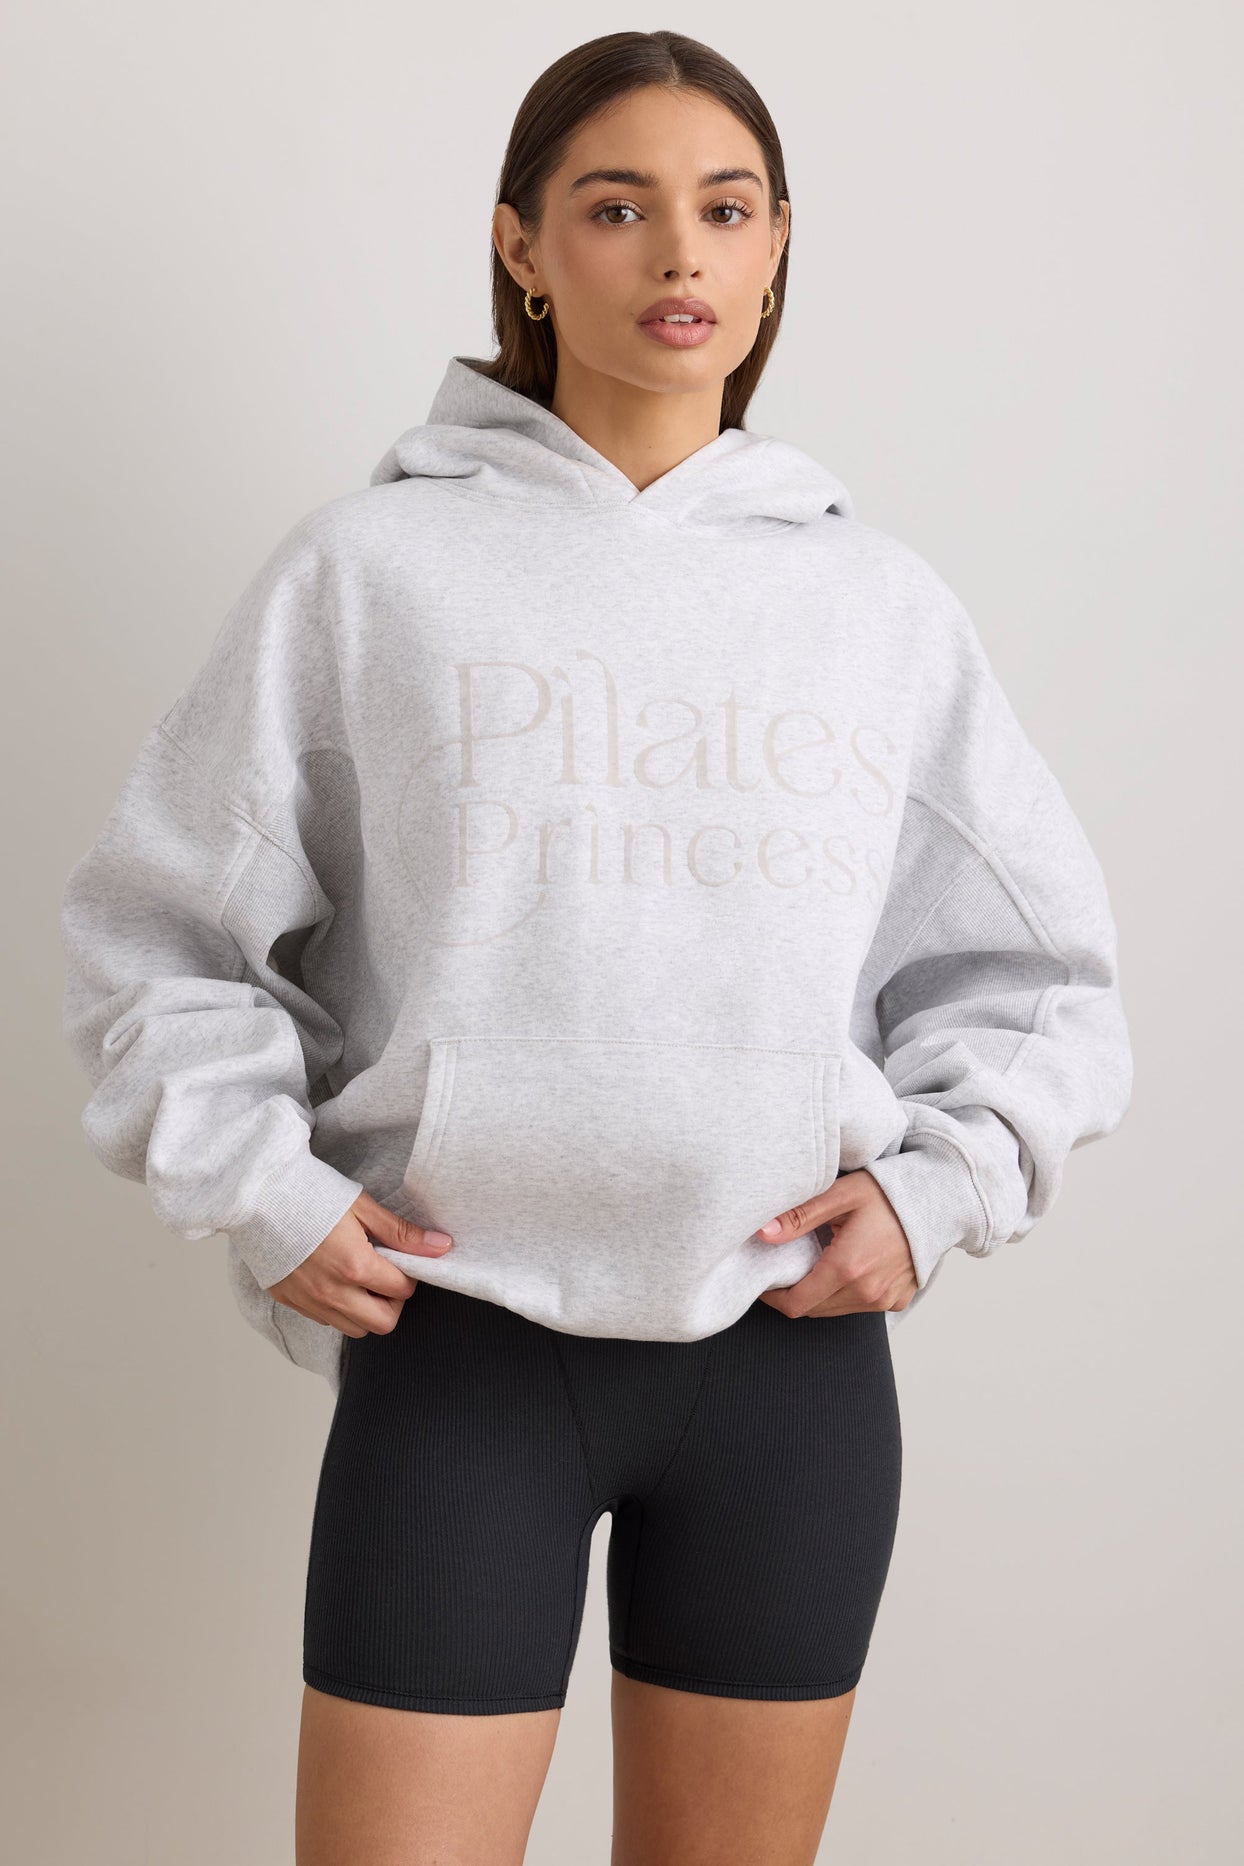 Pilates Princess – Oh Polly US